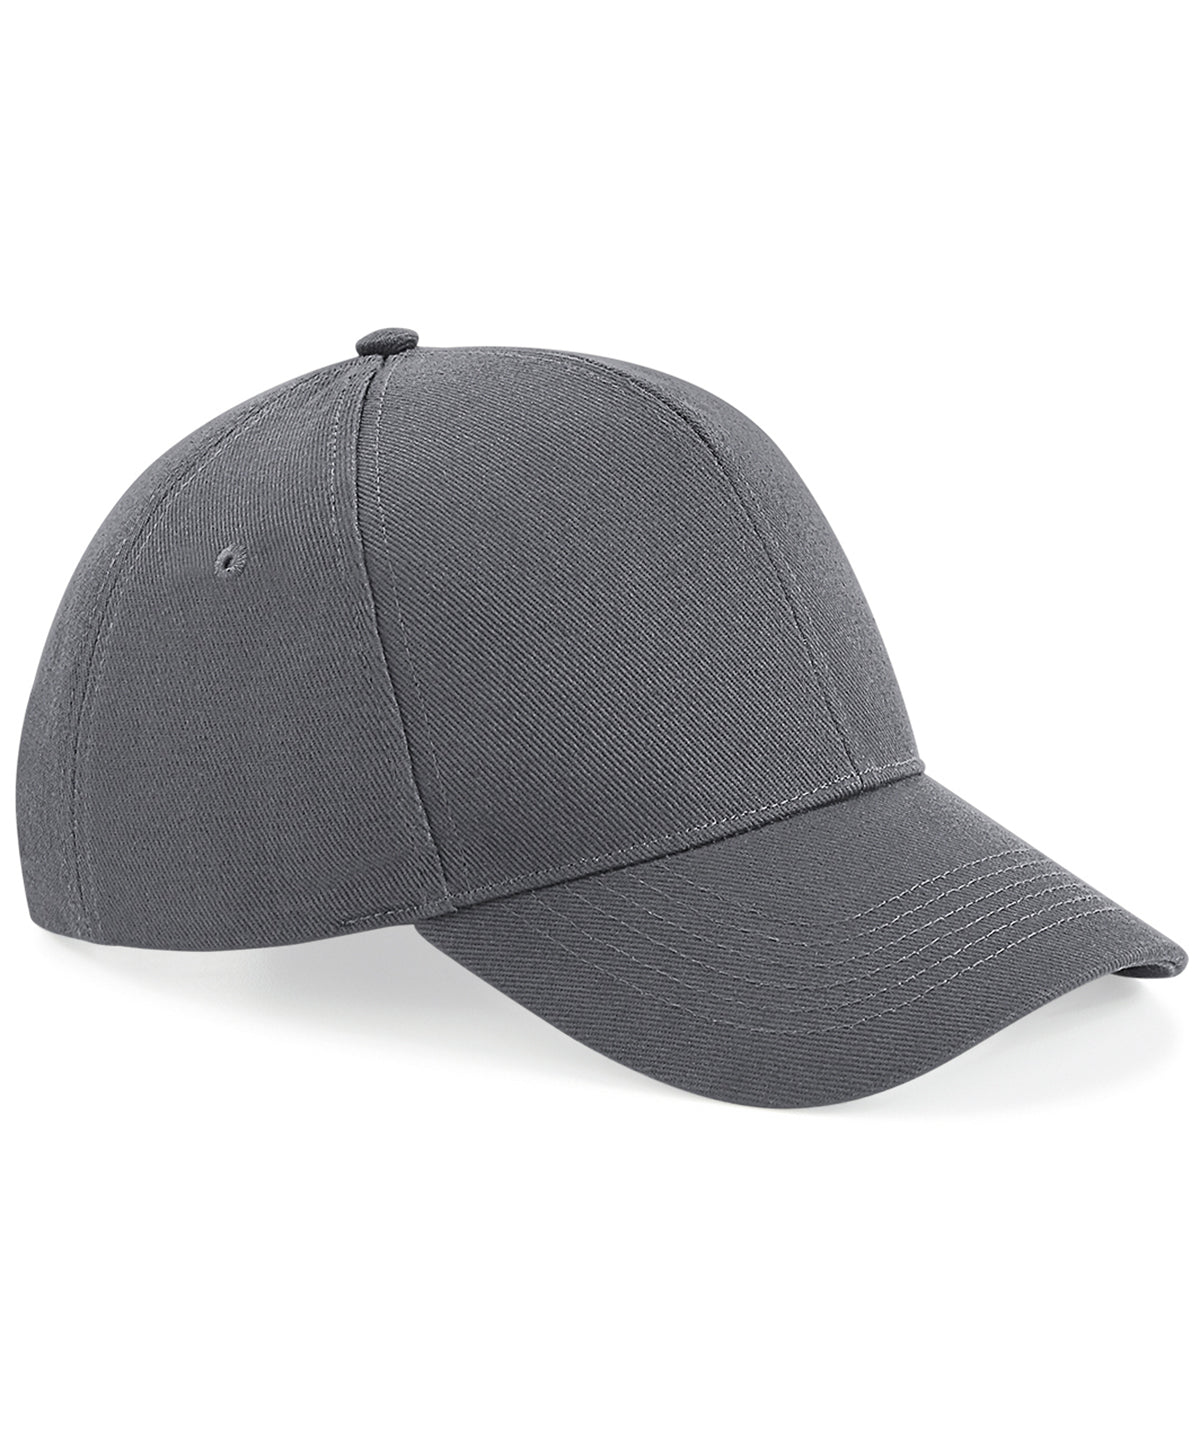 Personalised Caps - Dark Grey Beechfield Ultimate 6-panel cap